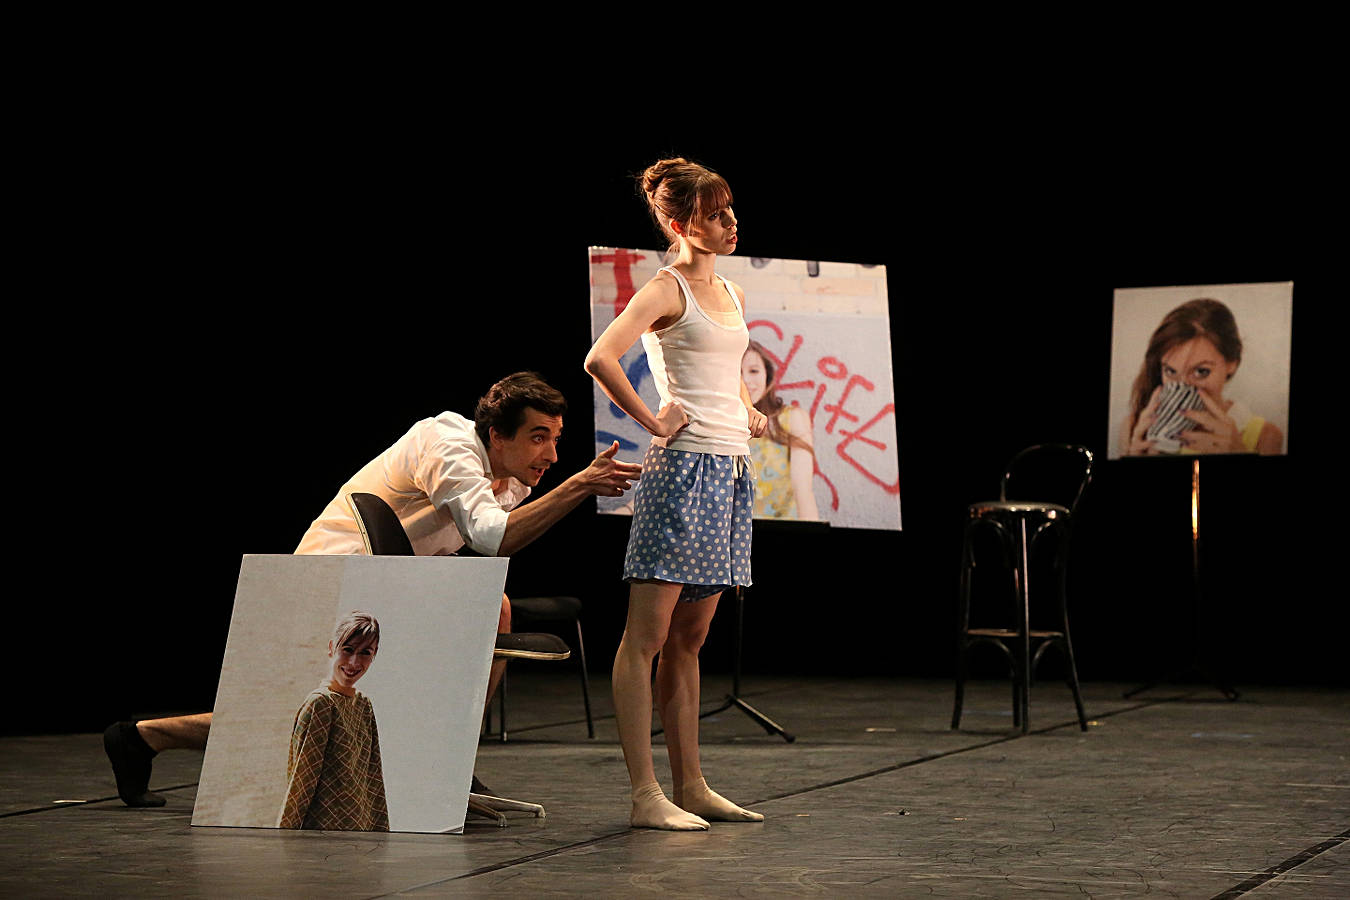 Özkan Ayik and Elisa Badenes, “Second Self(ie)” by Jesse Fraser // Stuttgarter Ballett - Noverre: Junge Choreographen. Bild: copy Ulrich Beuttenmüller